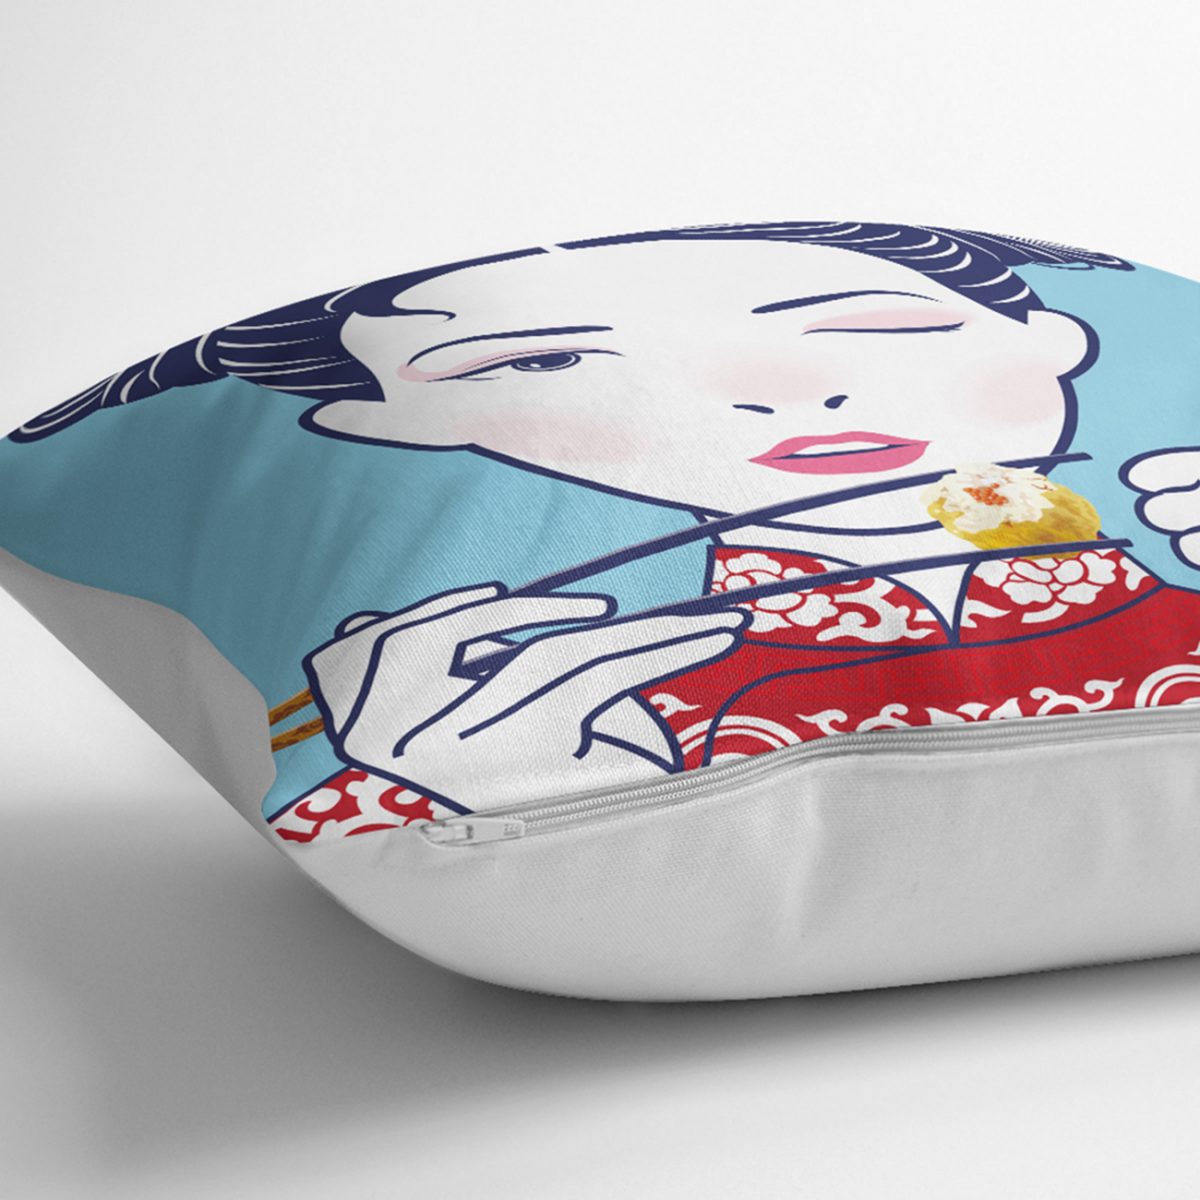 Suşi Yiyen Japon Kız Desenli Modern Kırlent Kılıfı Realhomes